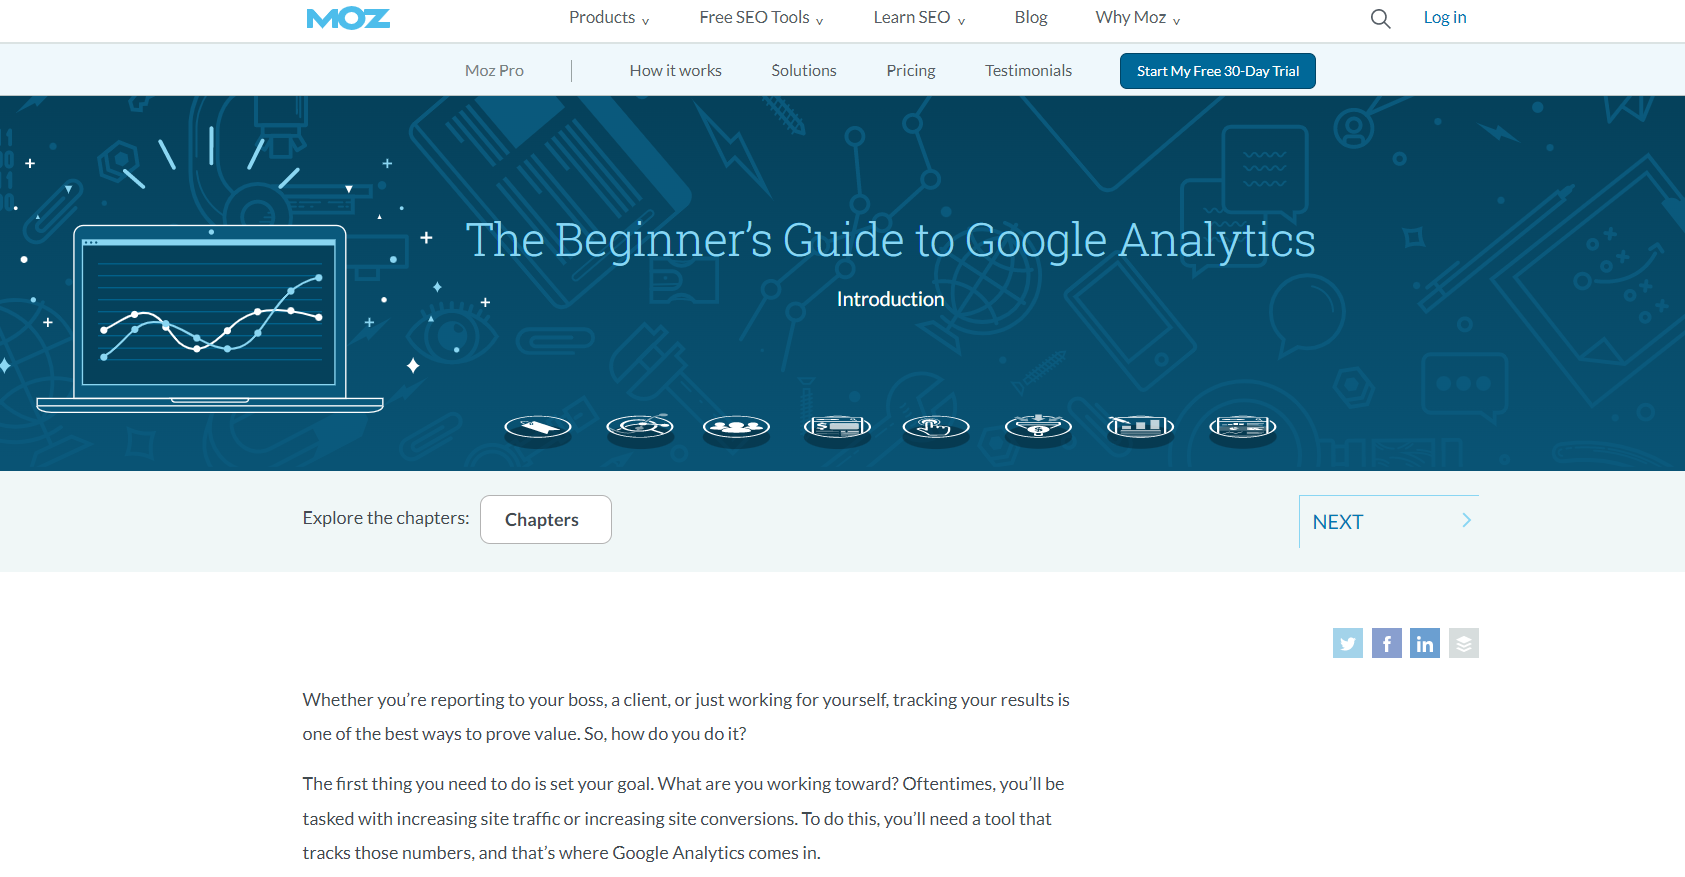 Moz’s Beginner’s Guide to Google Analytics (GA)